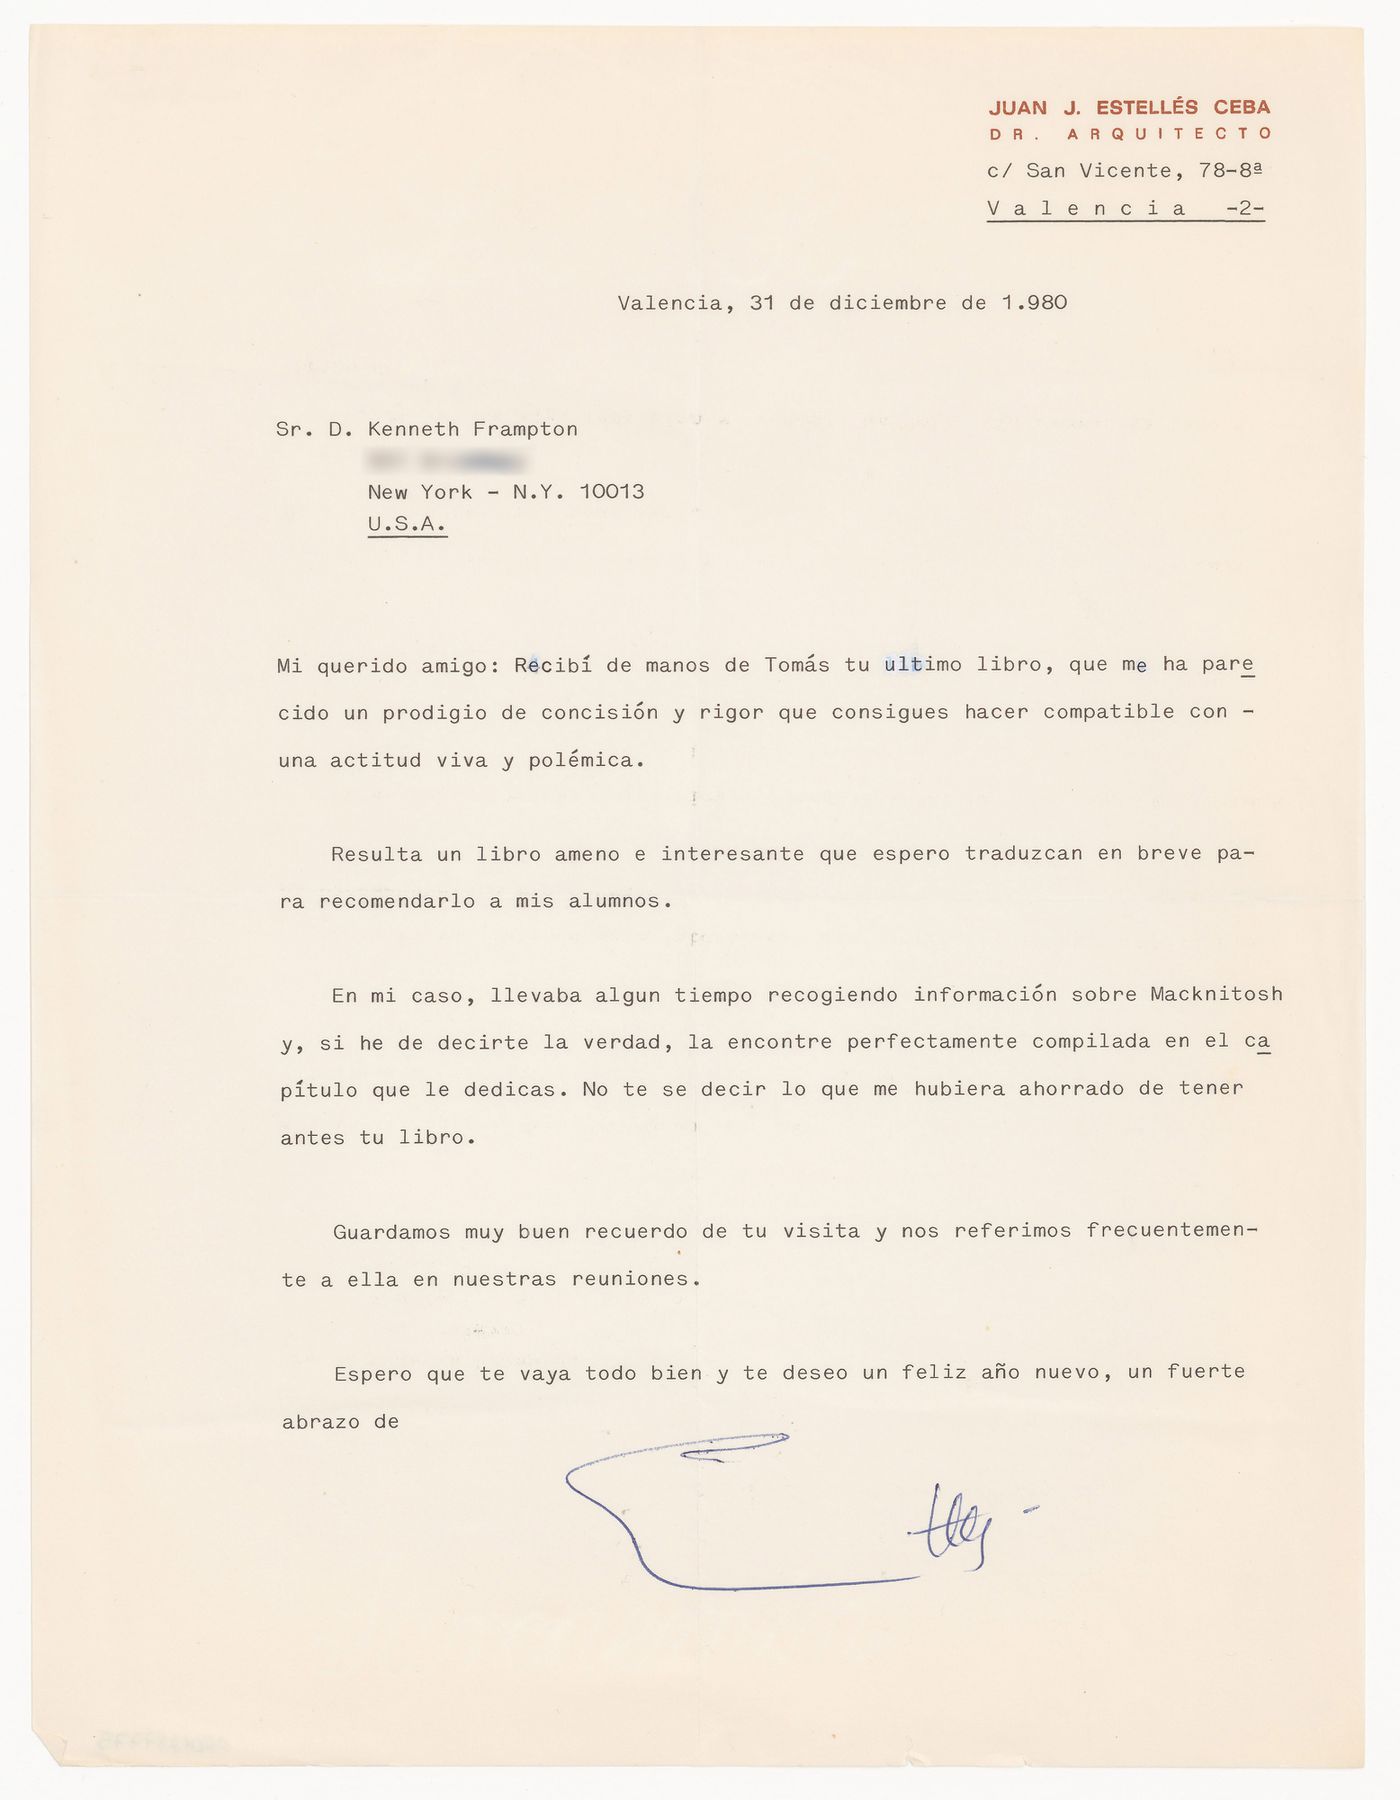 Letter from Juan J. Estellés Ceba to Kenneth Frampton